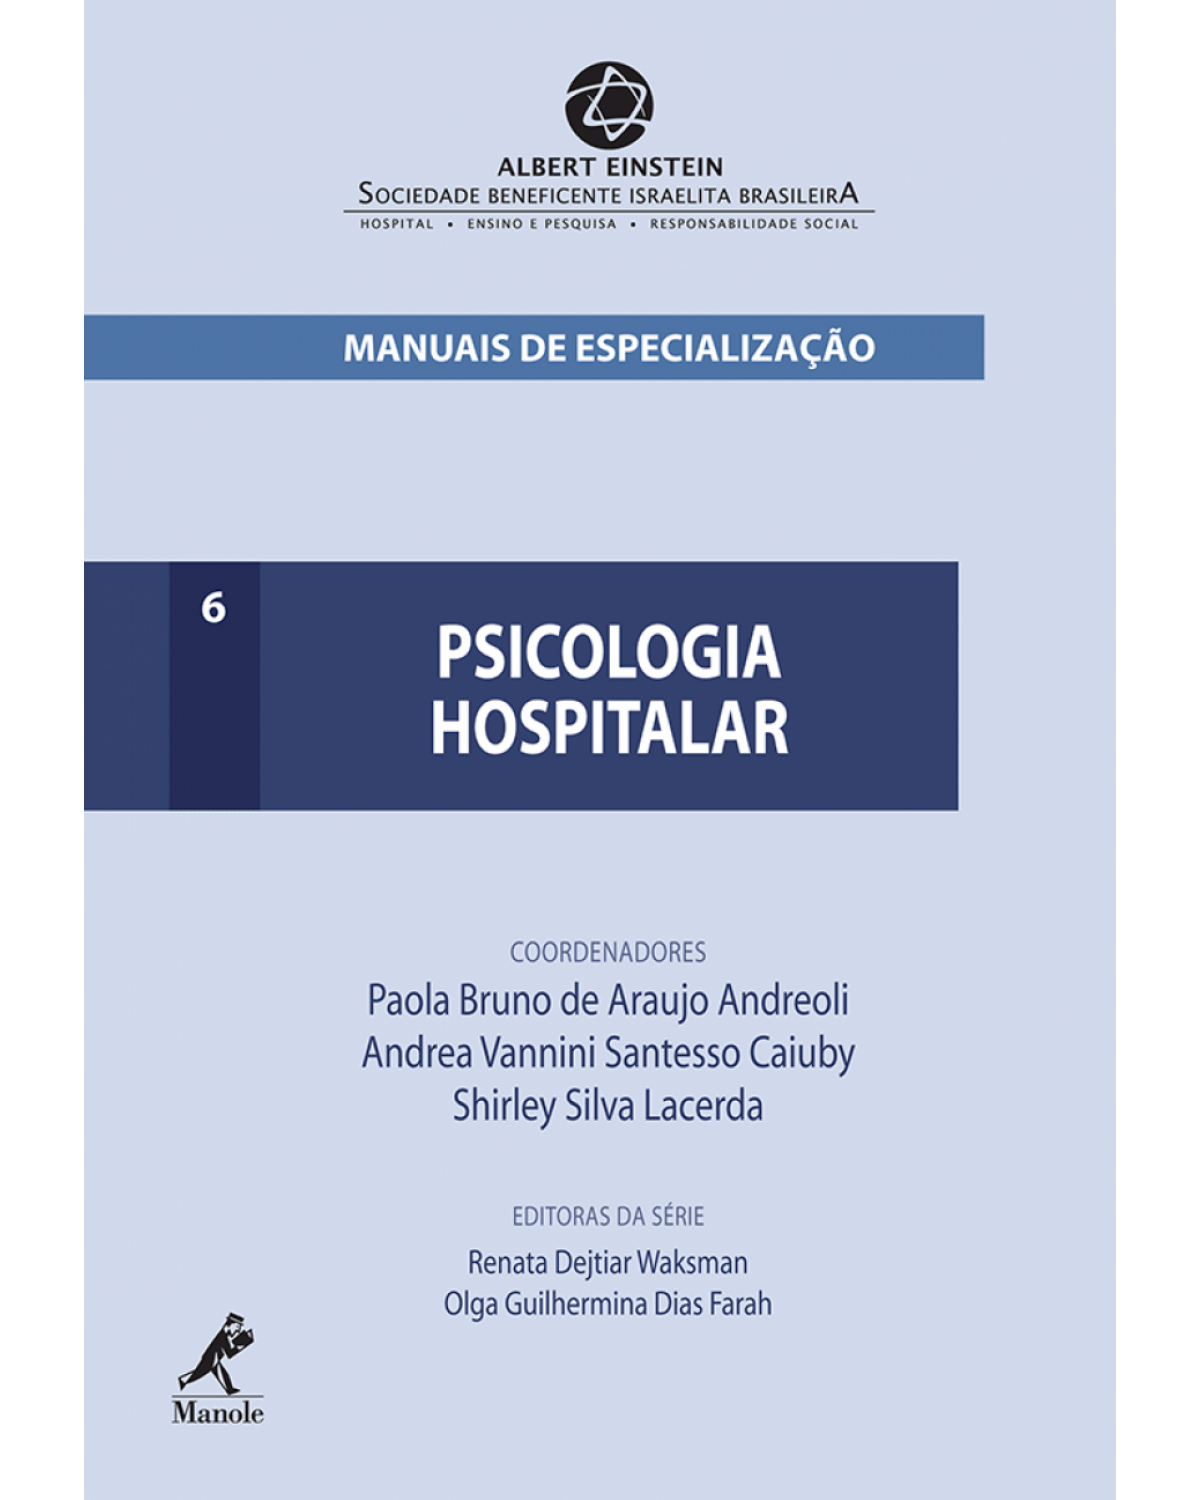 Psicologia hospitalar - Volume 6:  - 1ª Edição | 2013